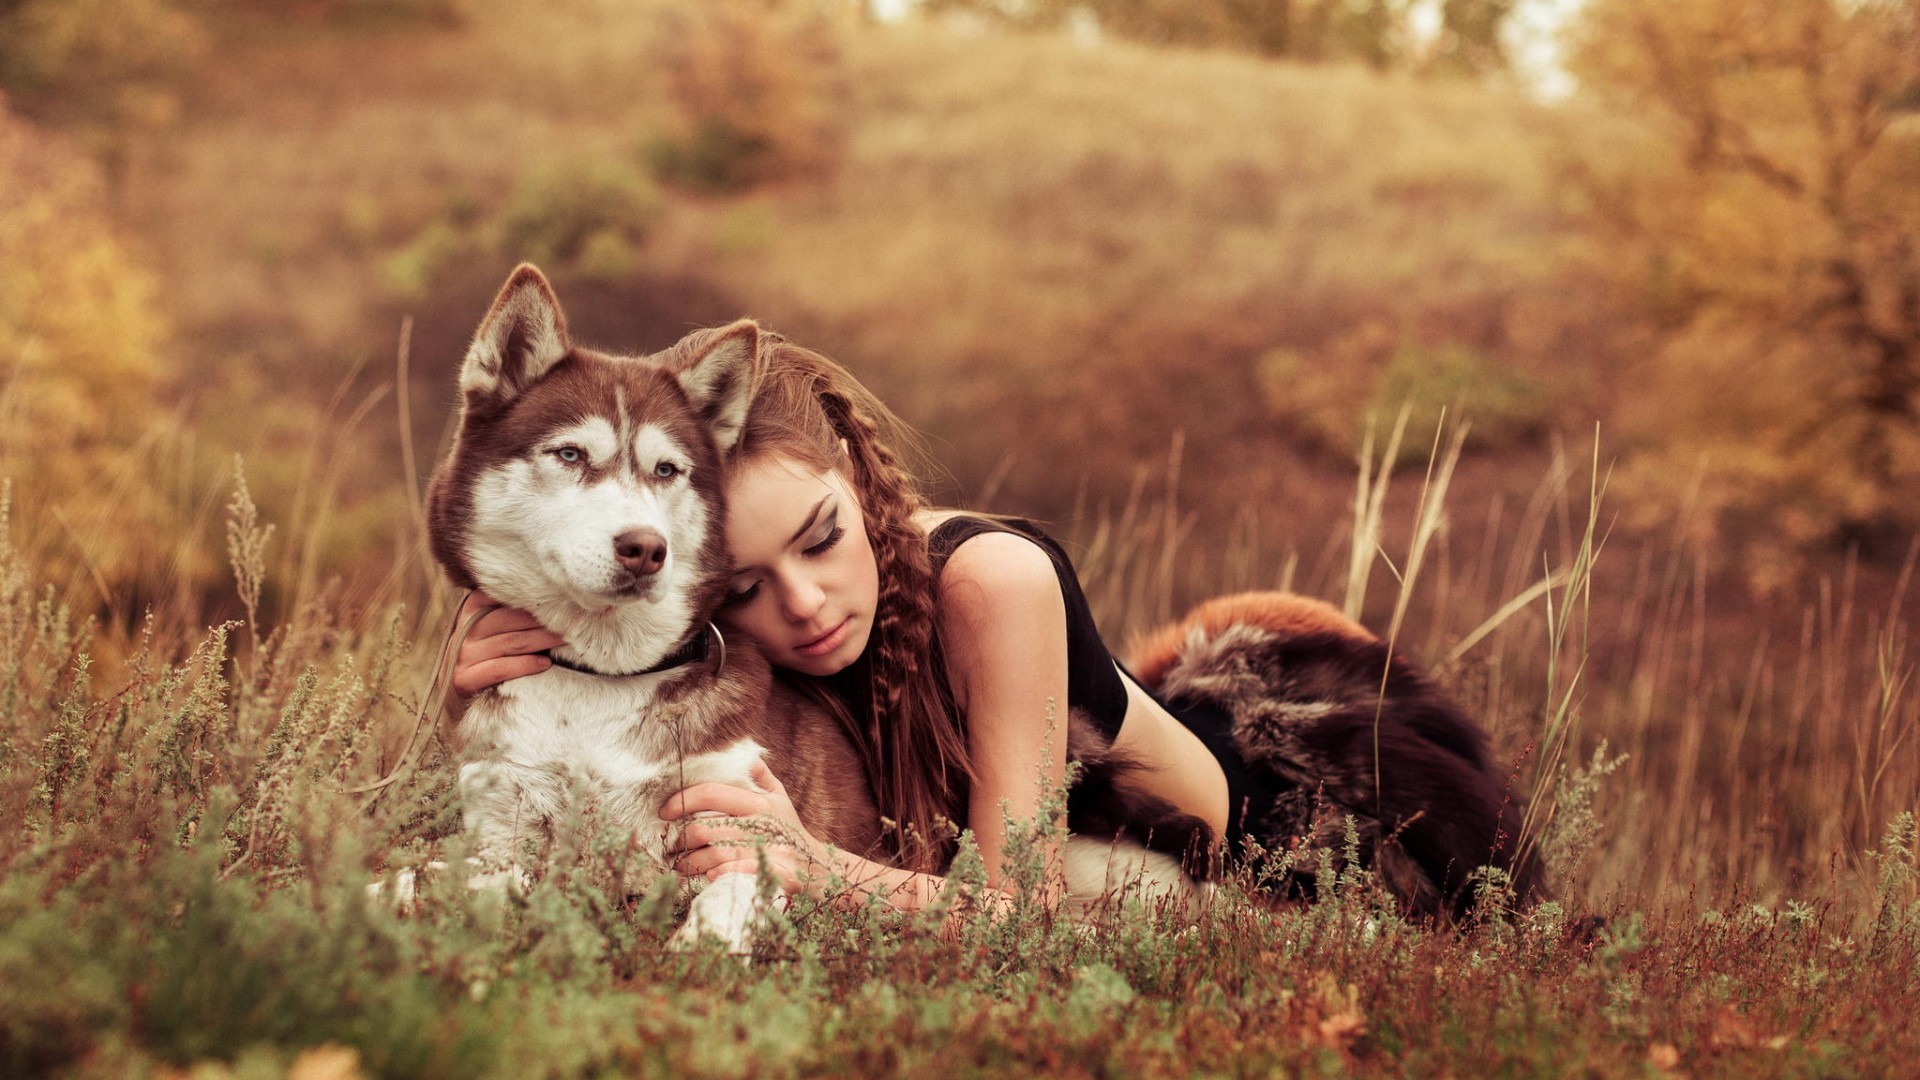 People 1920x1080 Siberian Husky  dog hugging women outdoors animals closed eyes women with dogs mammals outdoors makeup looking away women